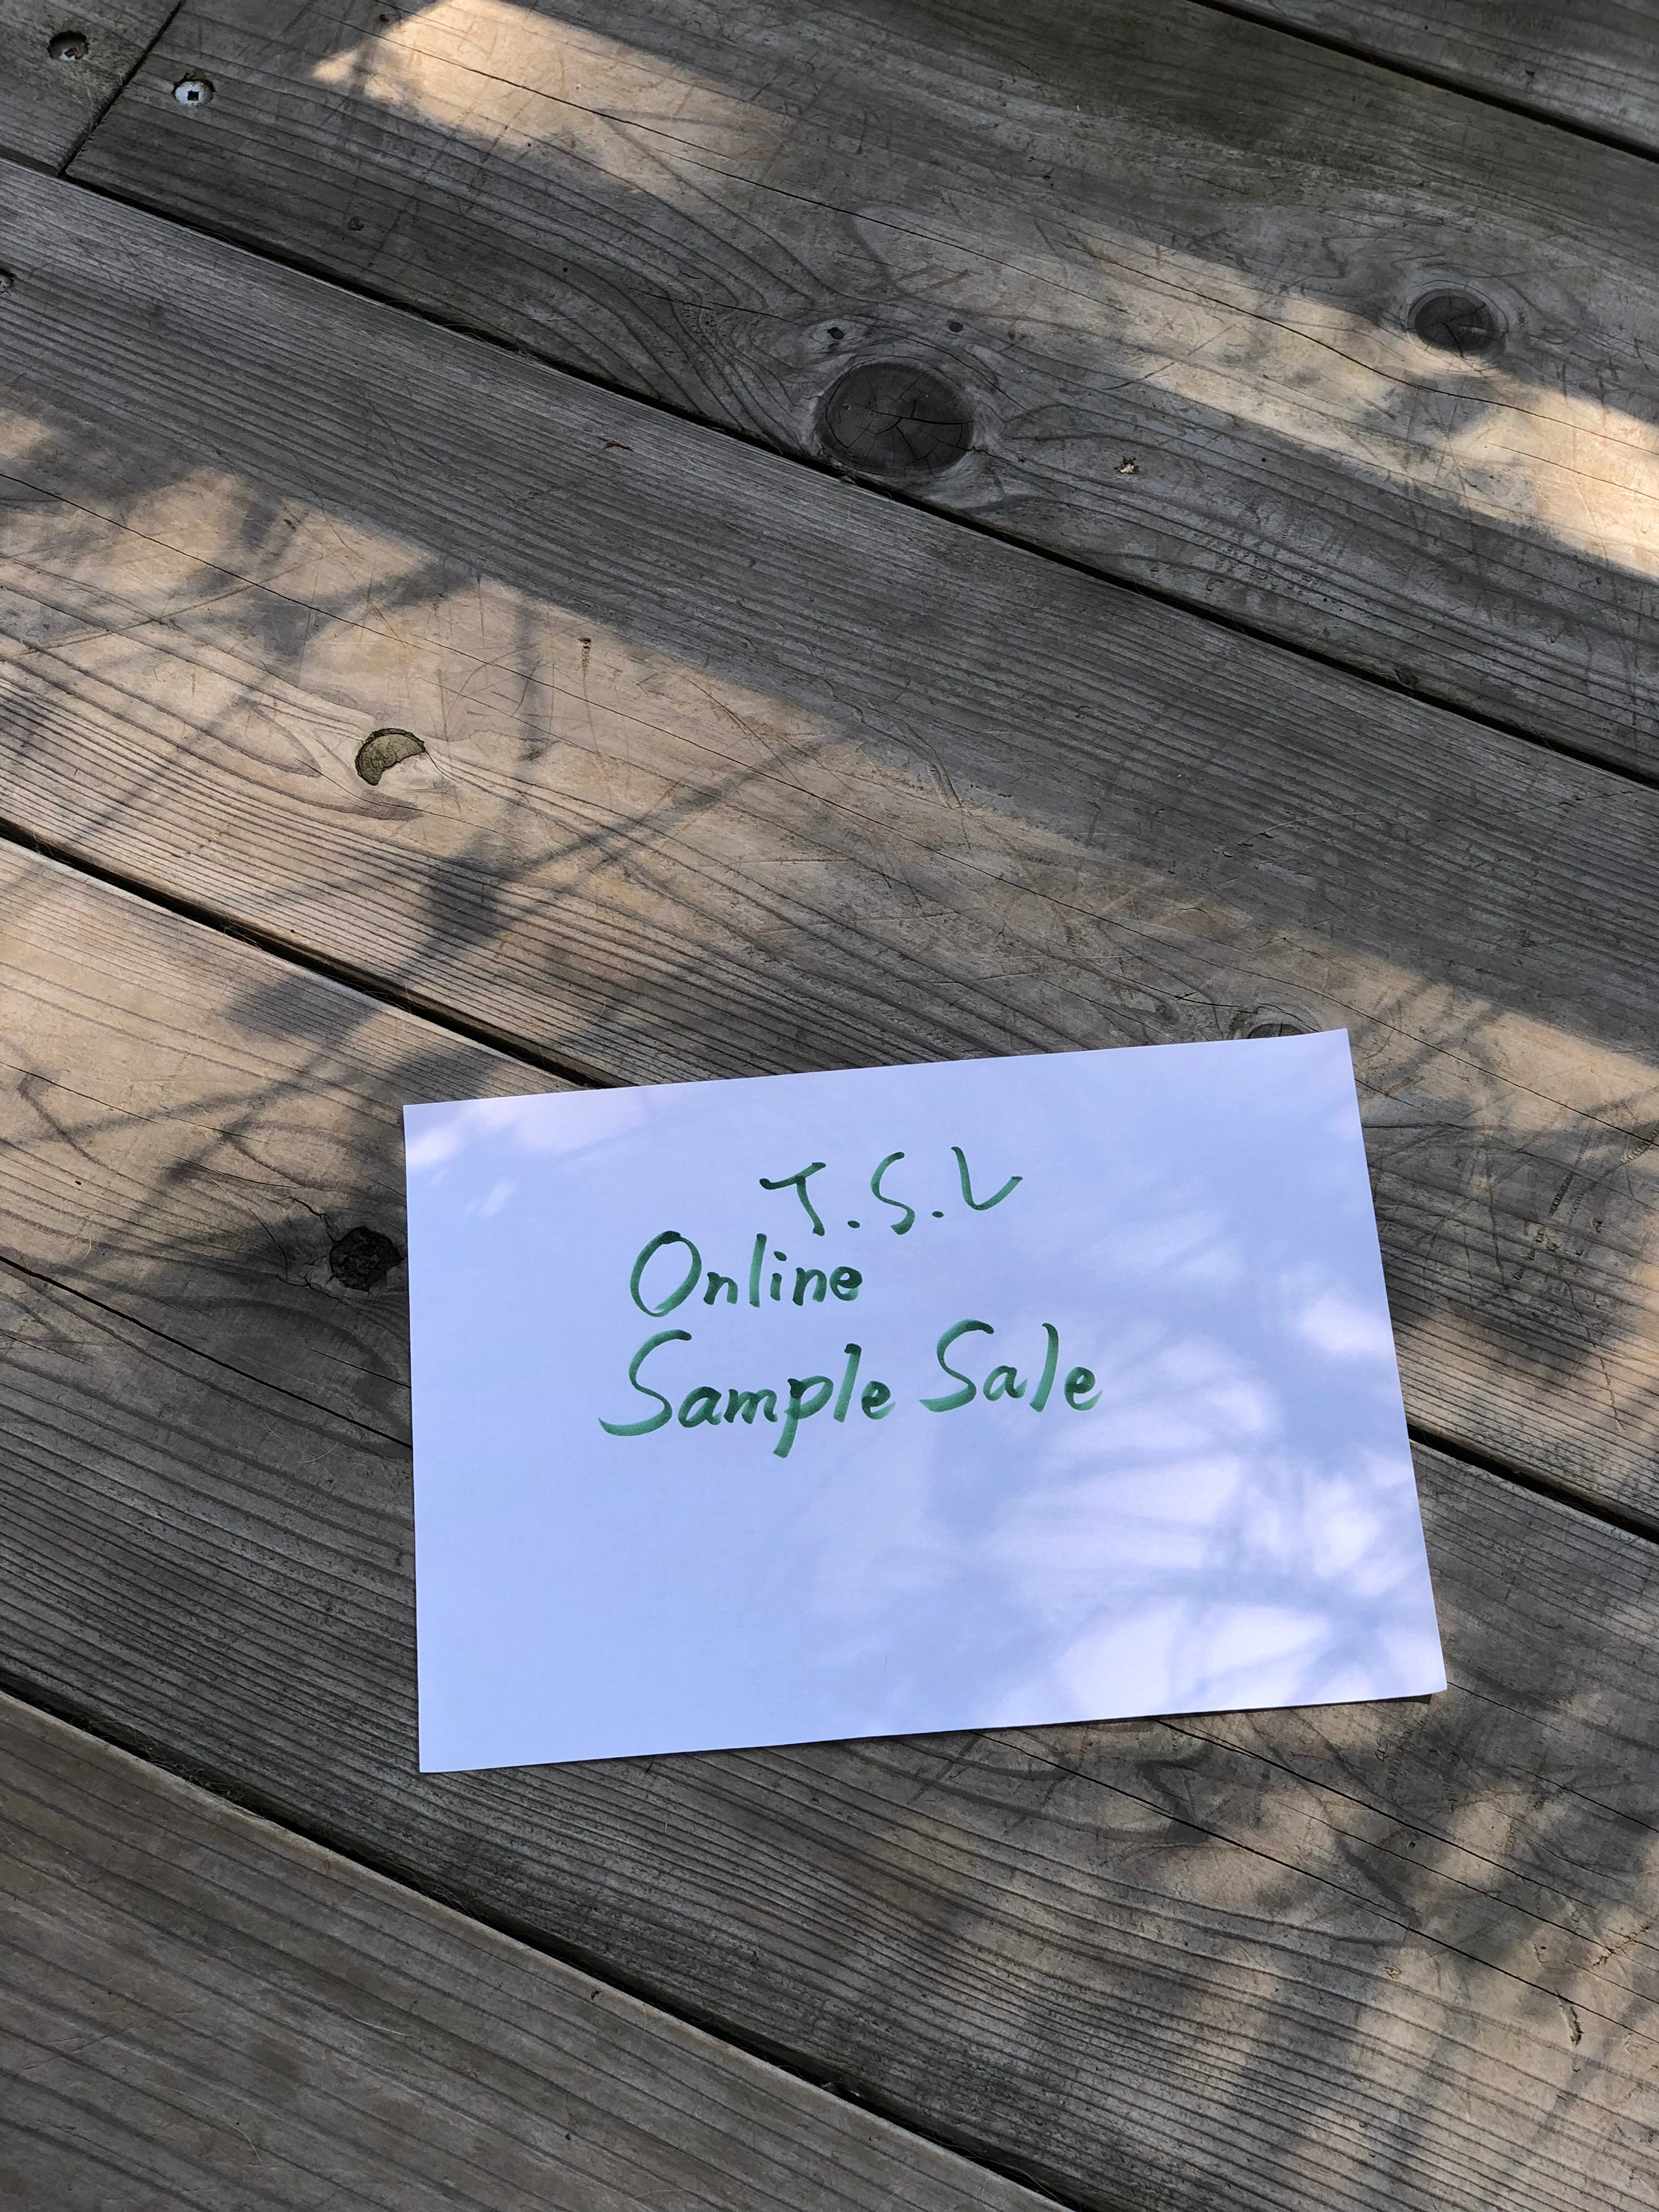 Notice of Online Sample Sale